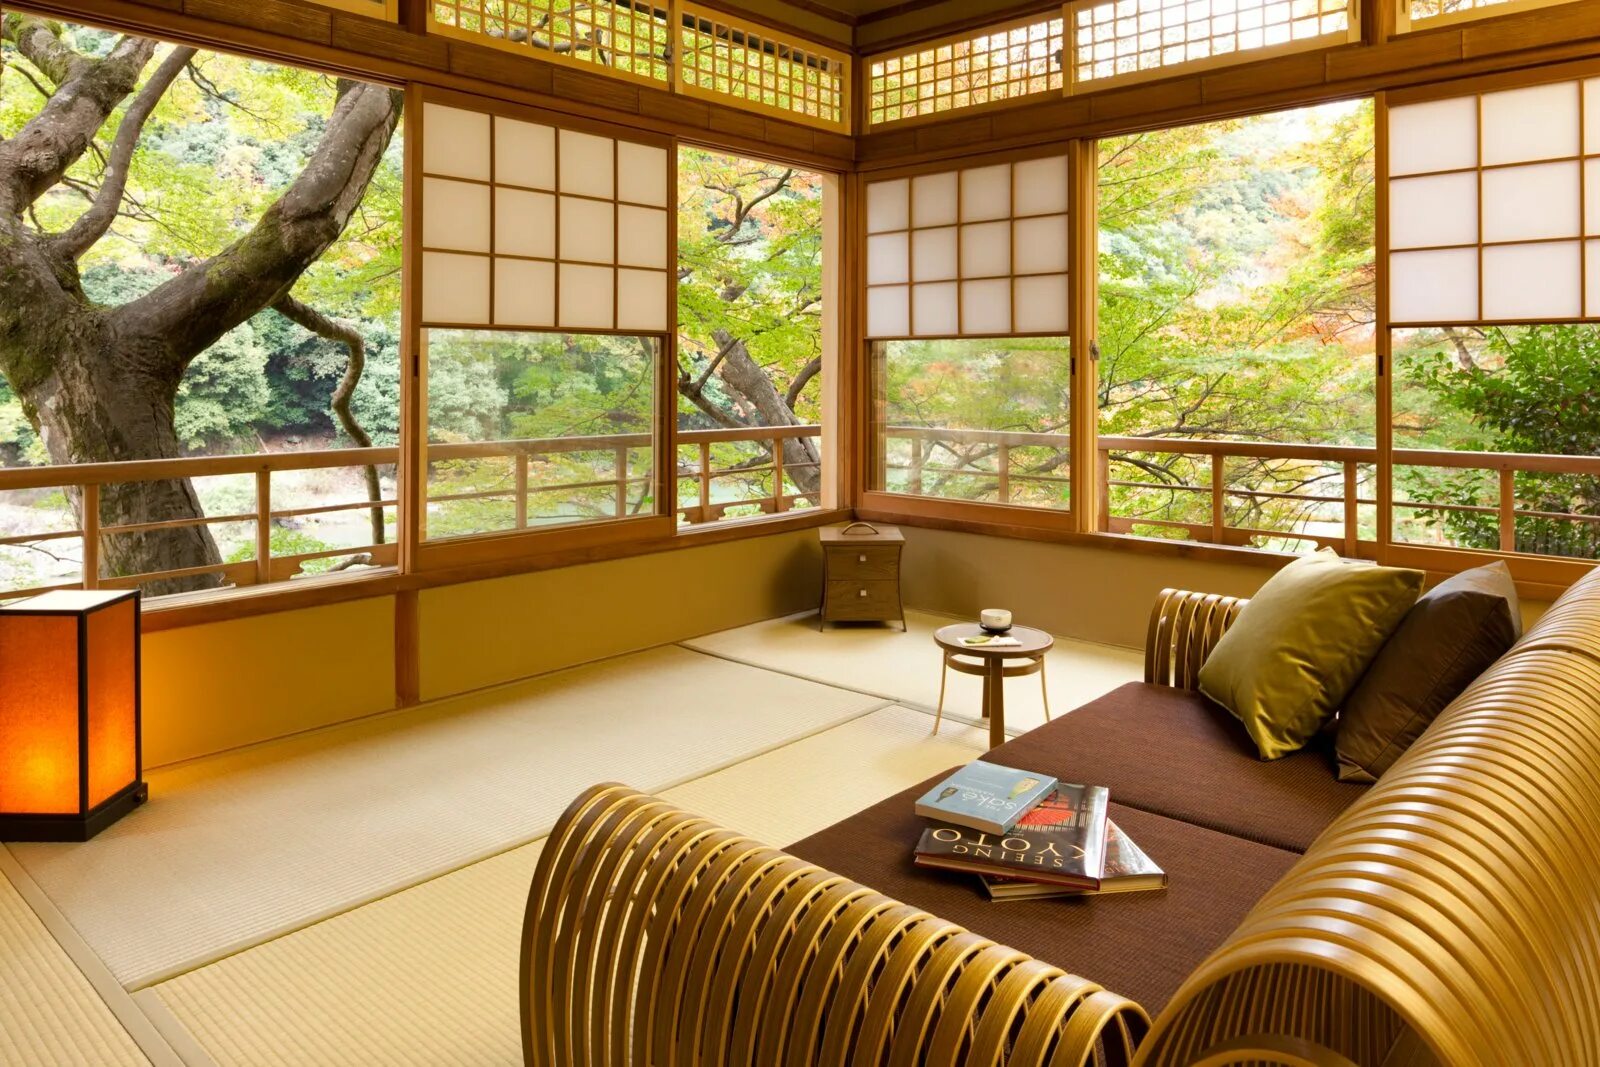 Гостиница HOSHINOYA Kyoto,. Минка японский дом интерьер. Японский стиль в интерьере. Традиционный японский интерьер. Японские дома купить